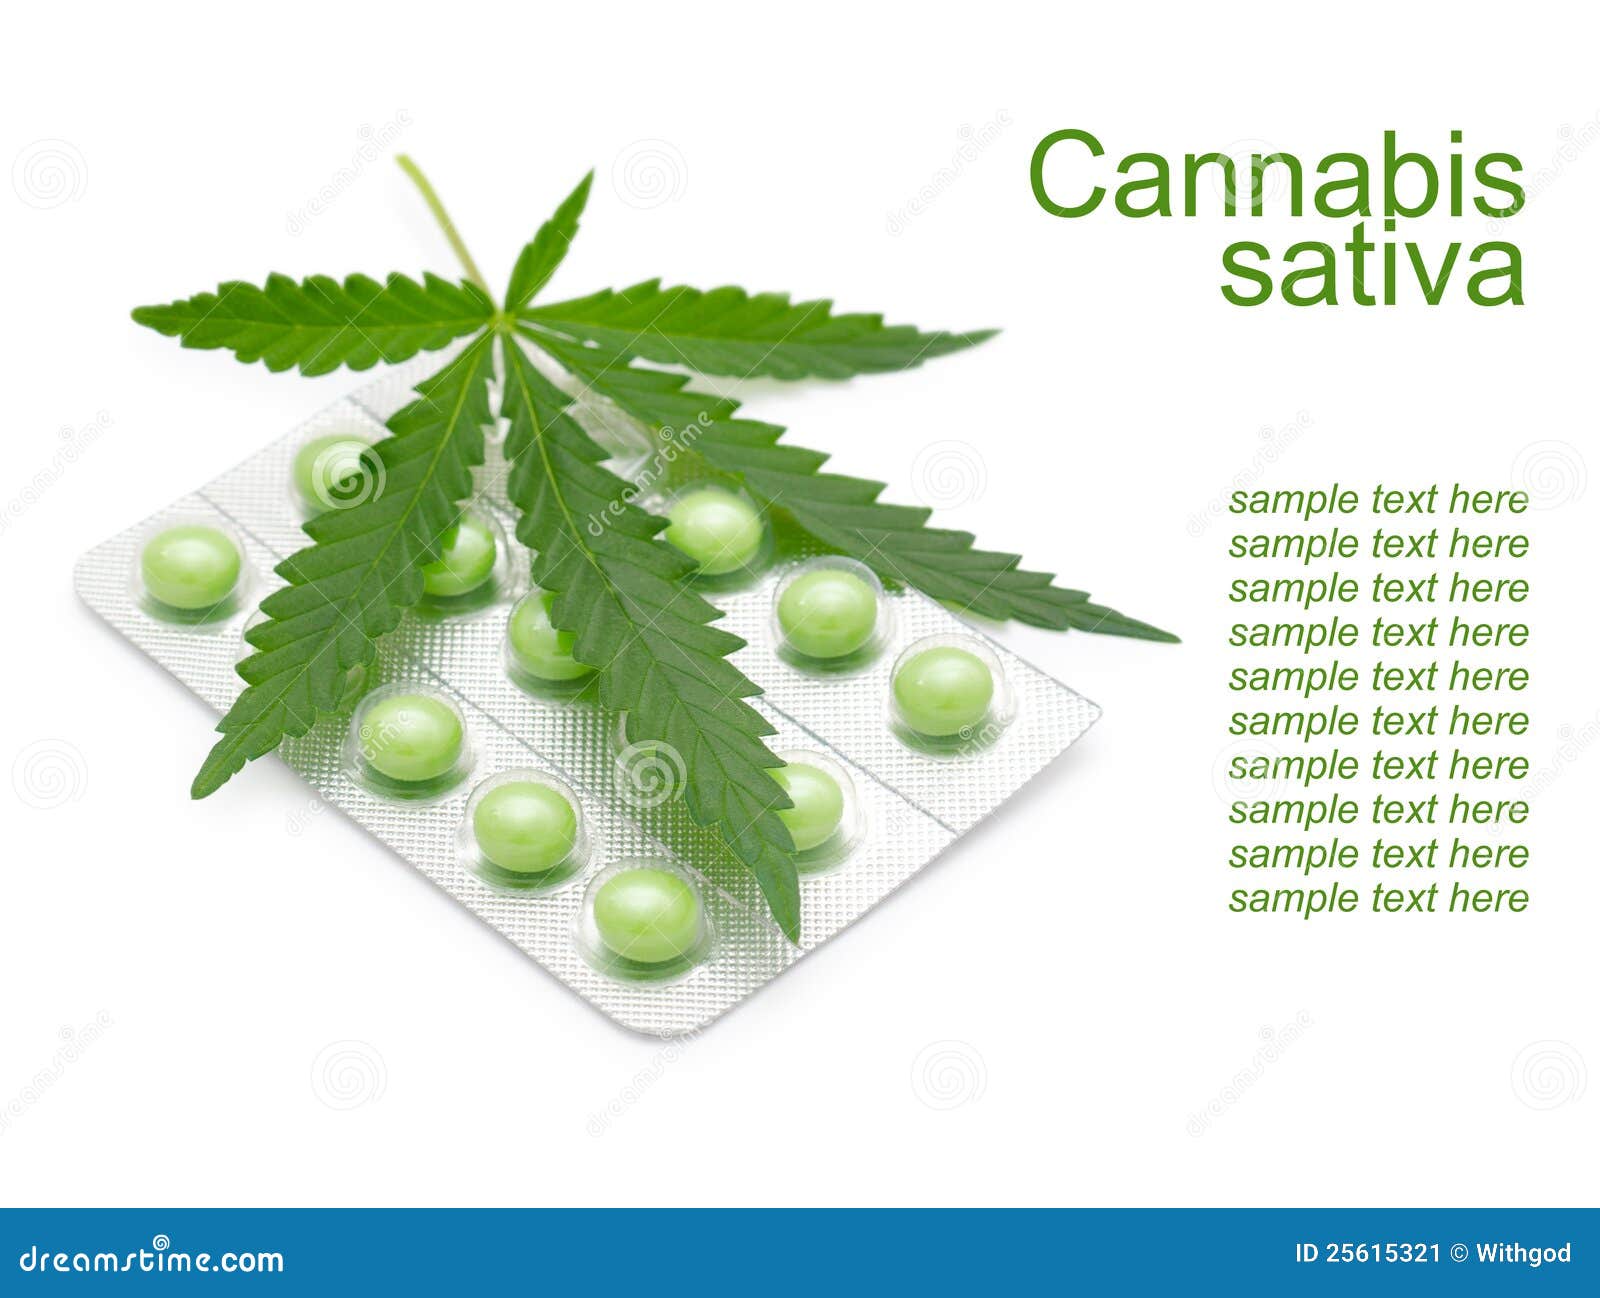 Cannabis Sativa Monograph Pdf Files